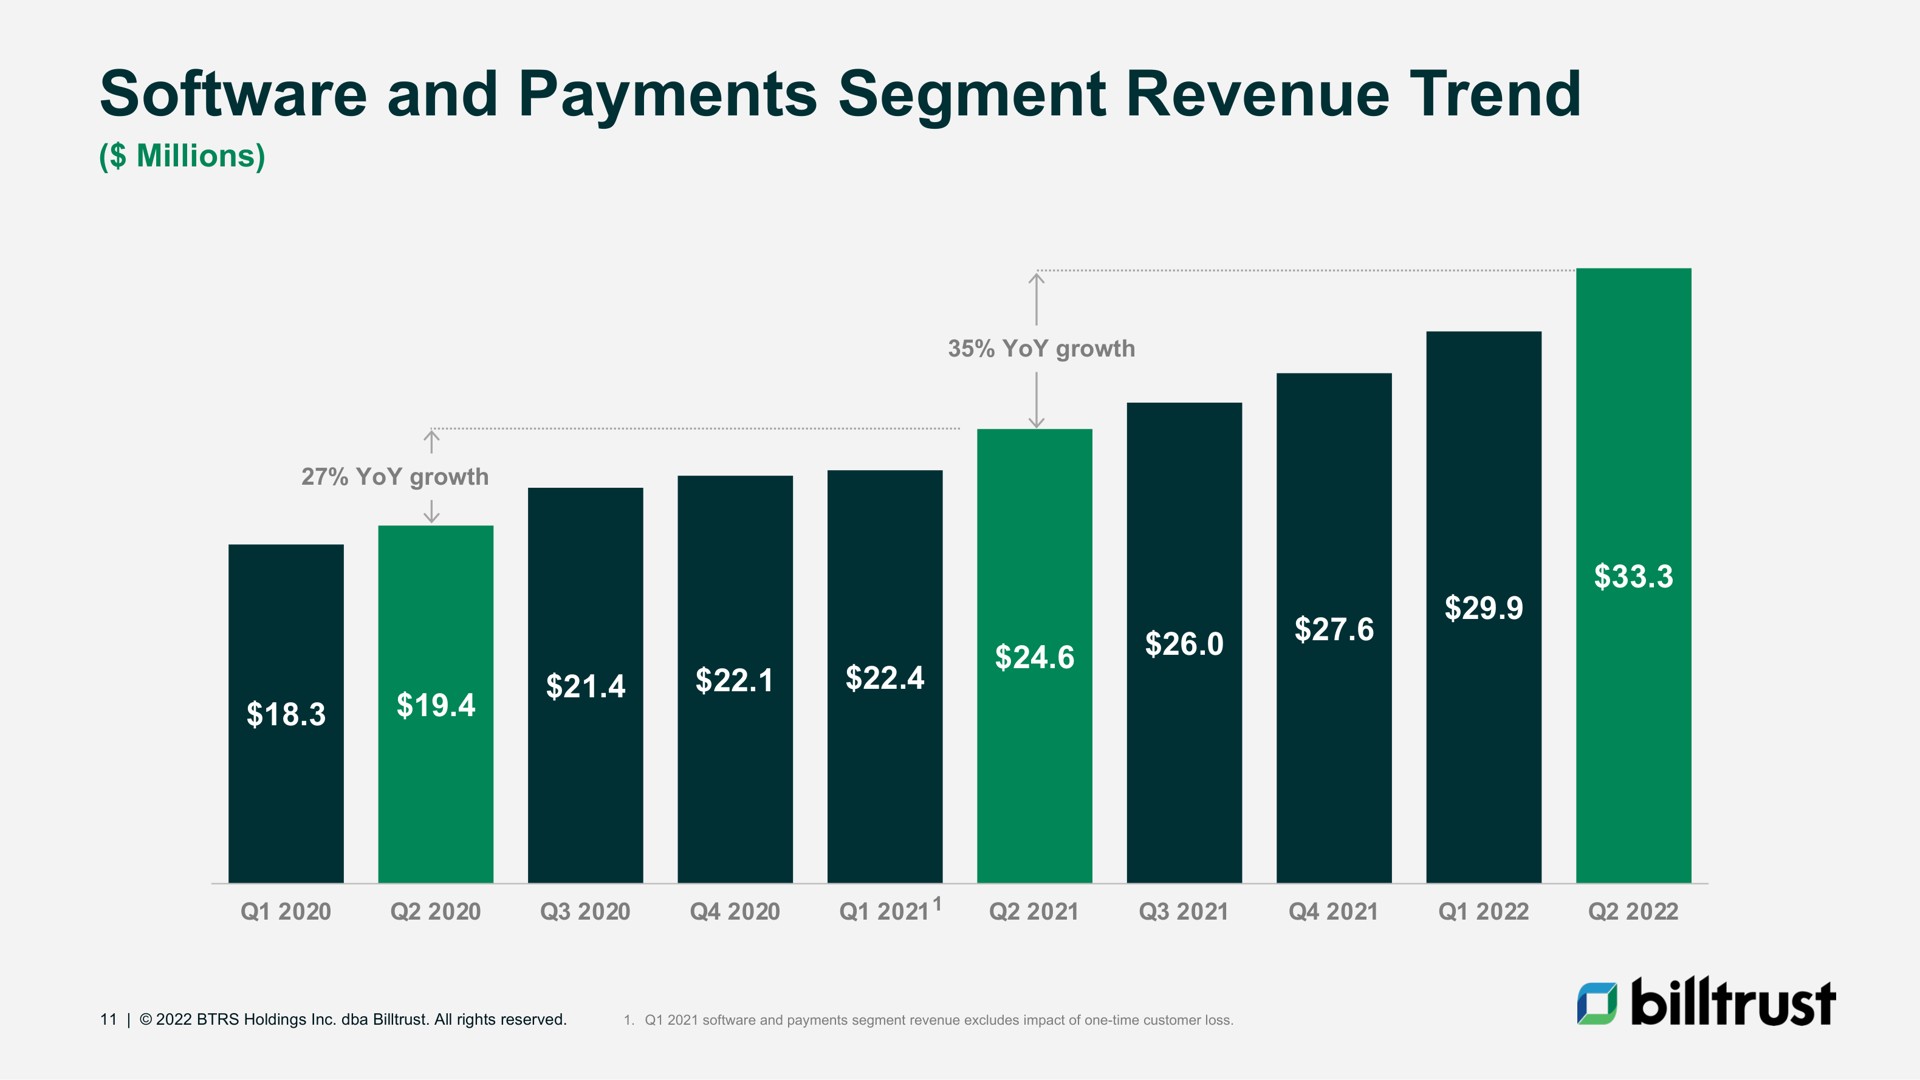 and payments segment revenue trend | Billtrust